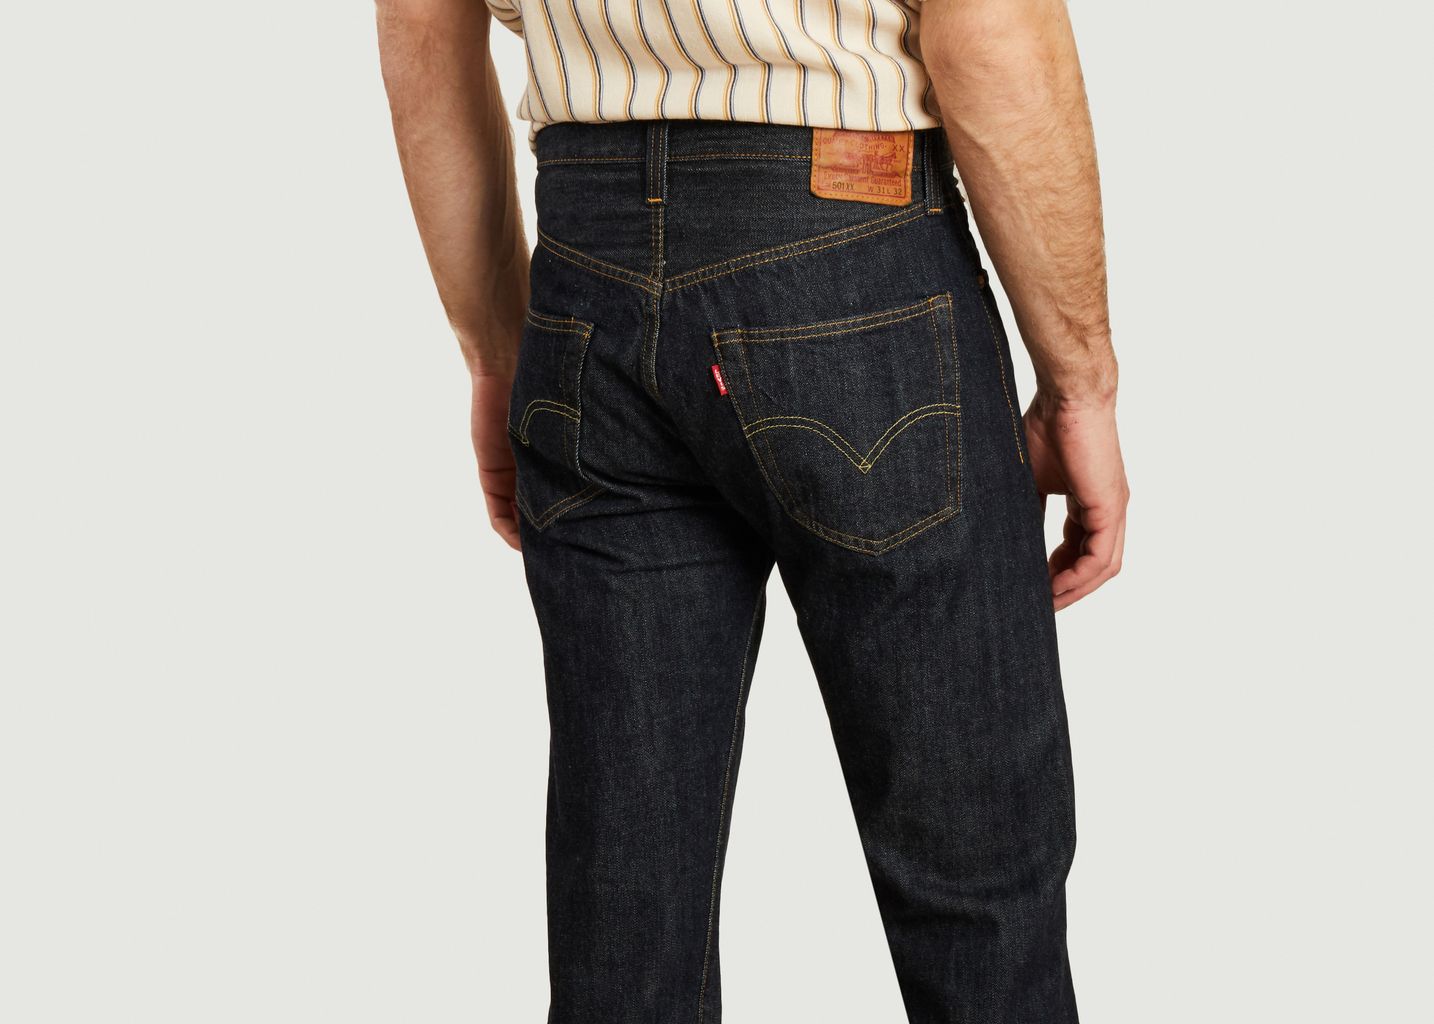 1947 501 selvedge brut jeans - Levi's Vintage